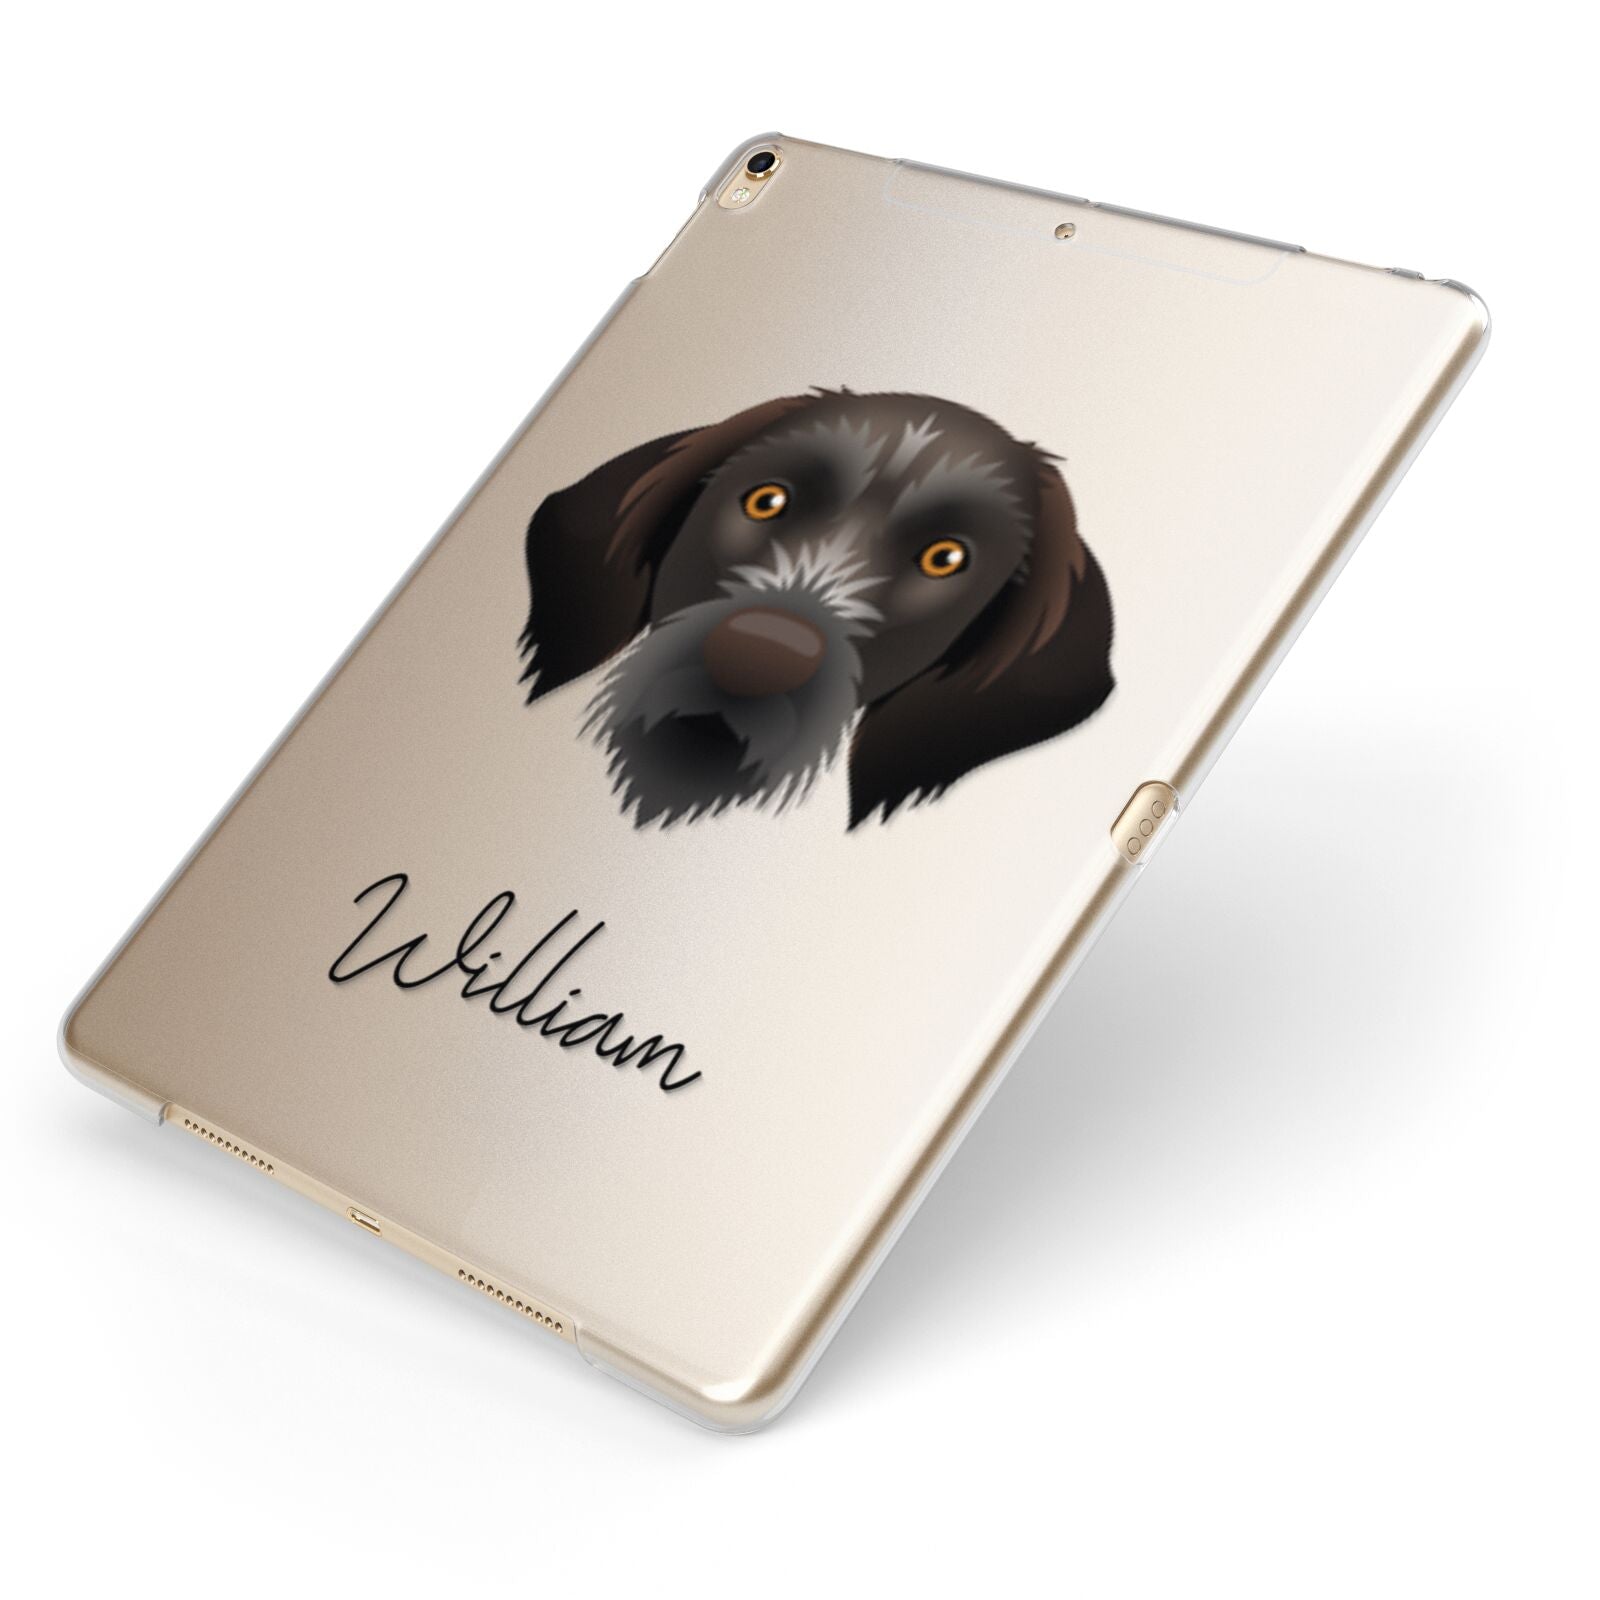 Korthals Griffon Personalised Apple iPad Case on Gold iPad Side View